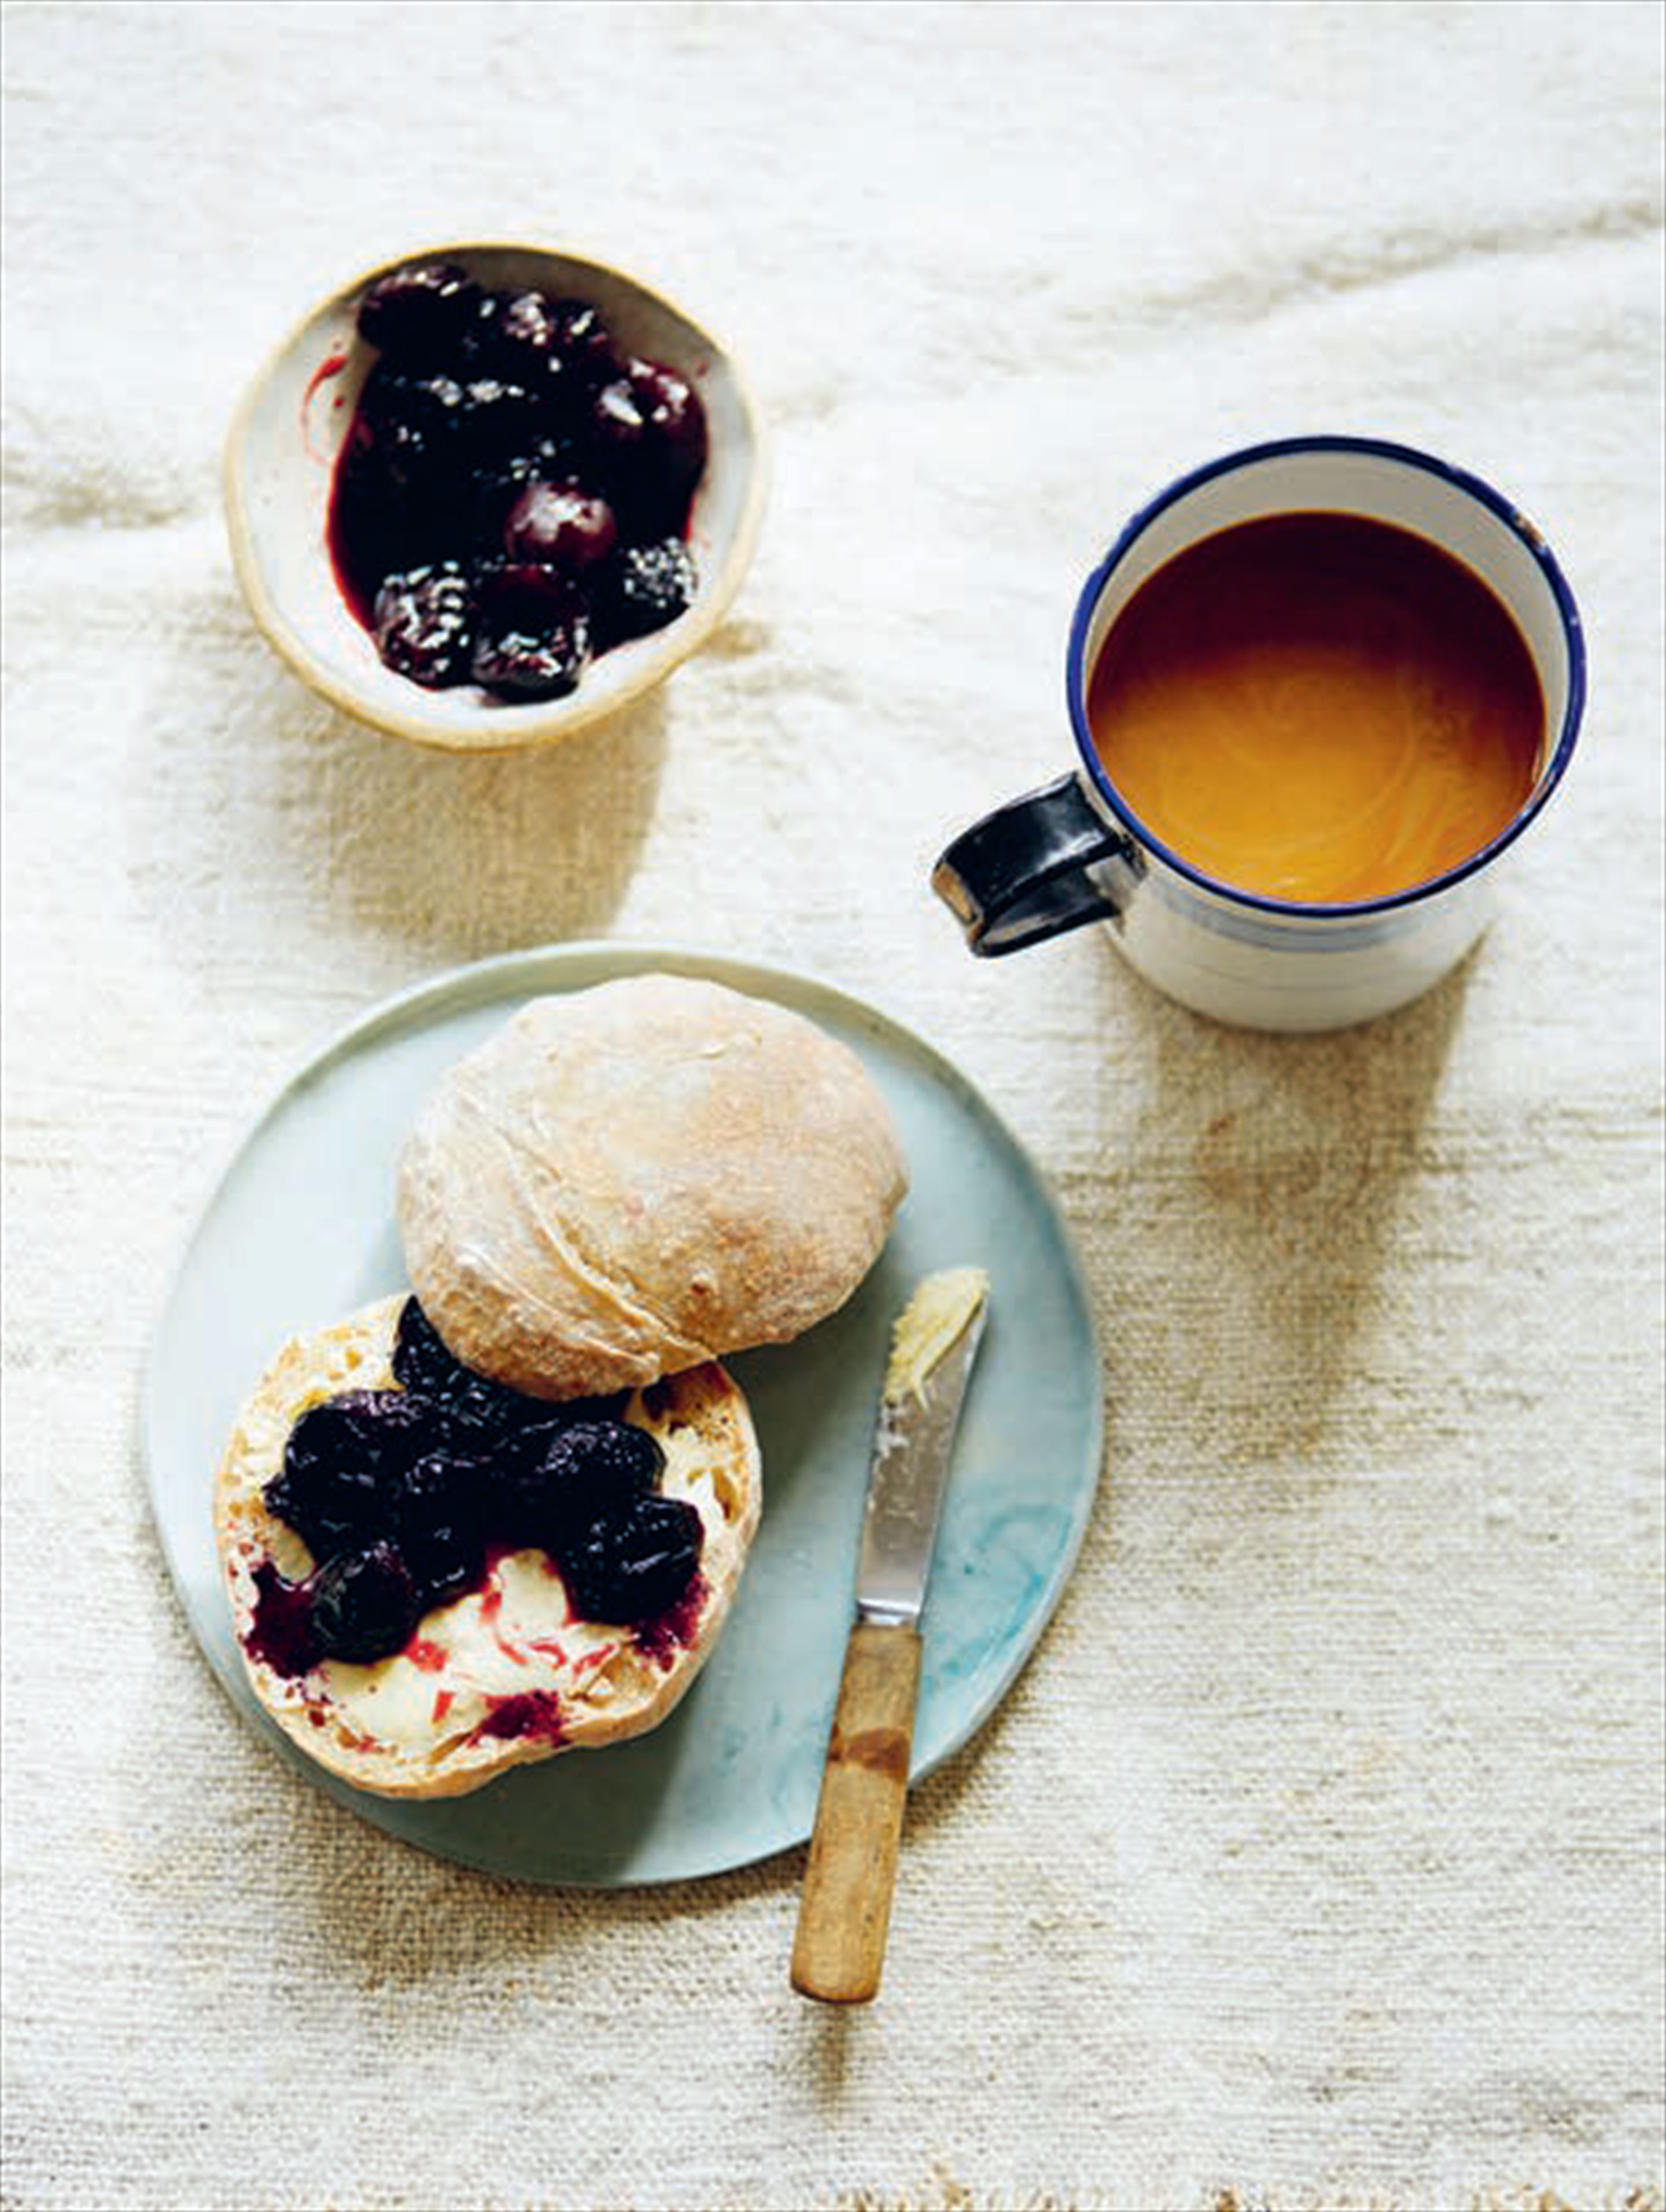 7a.m. breakfast rolls with sour cherry & vanilla jam